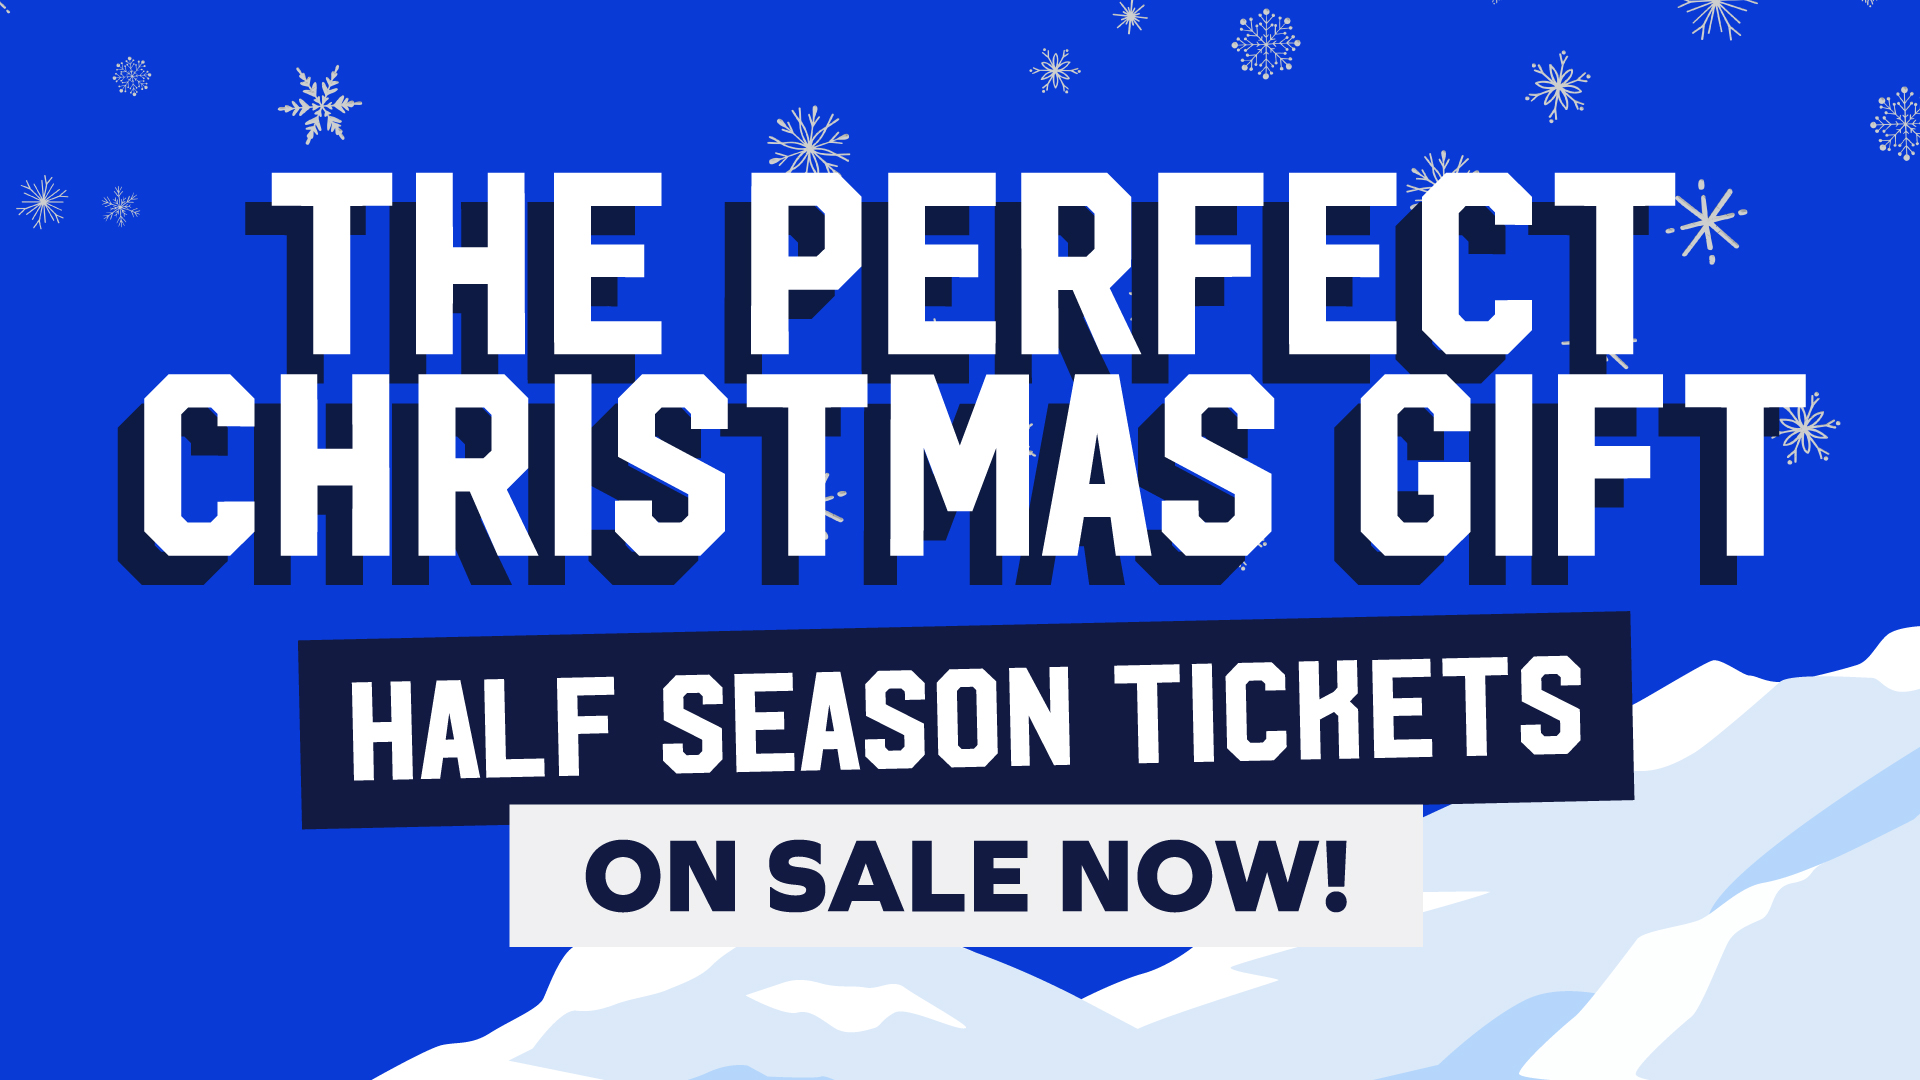 Get your Half Season Ticket this Christmas...